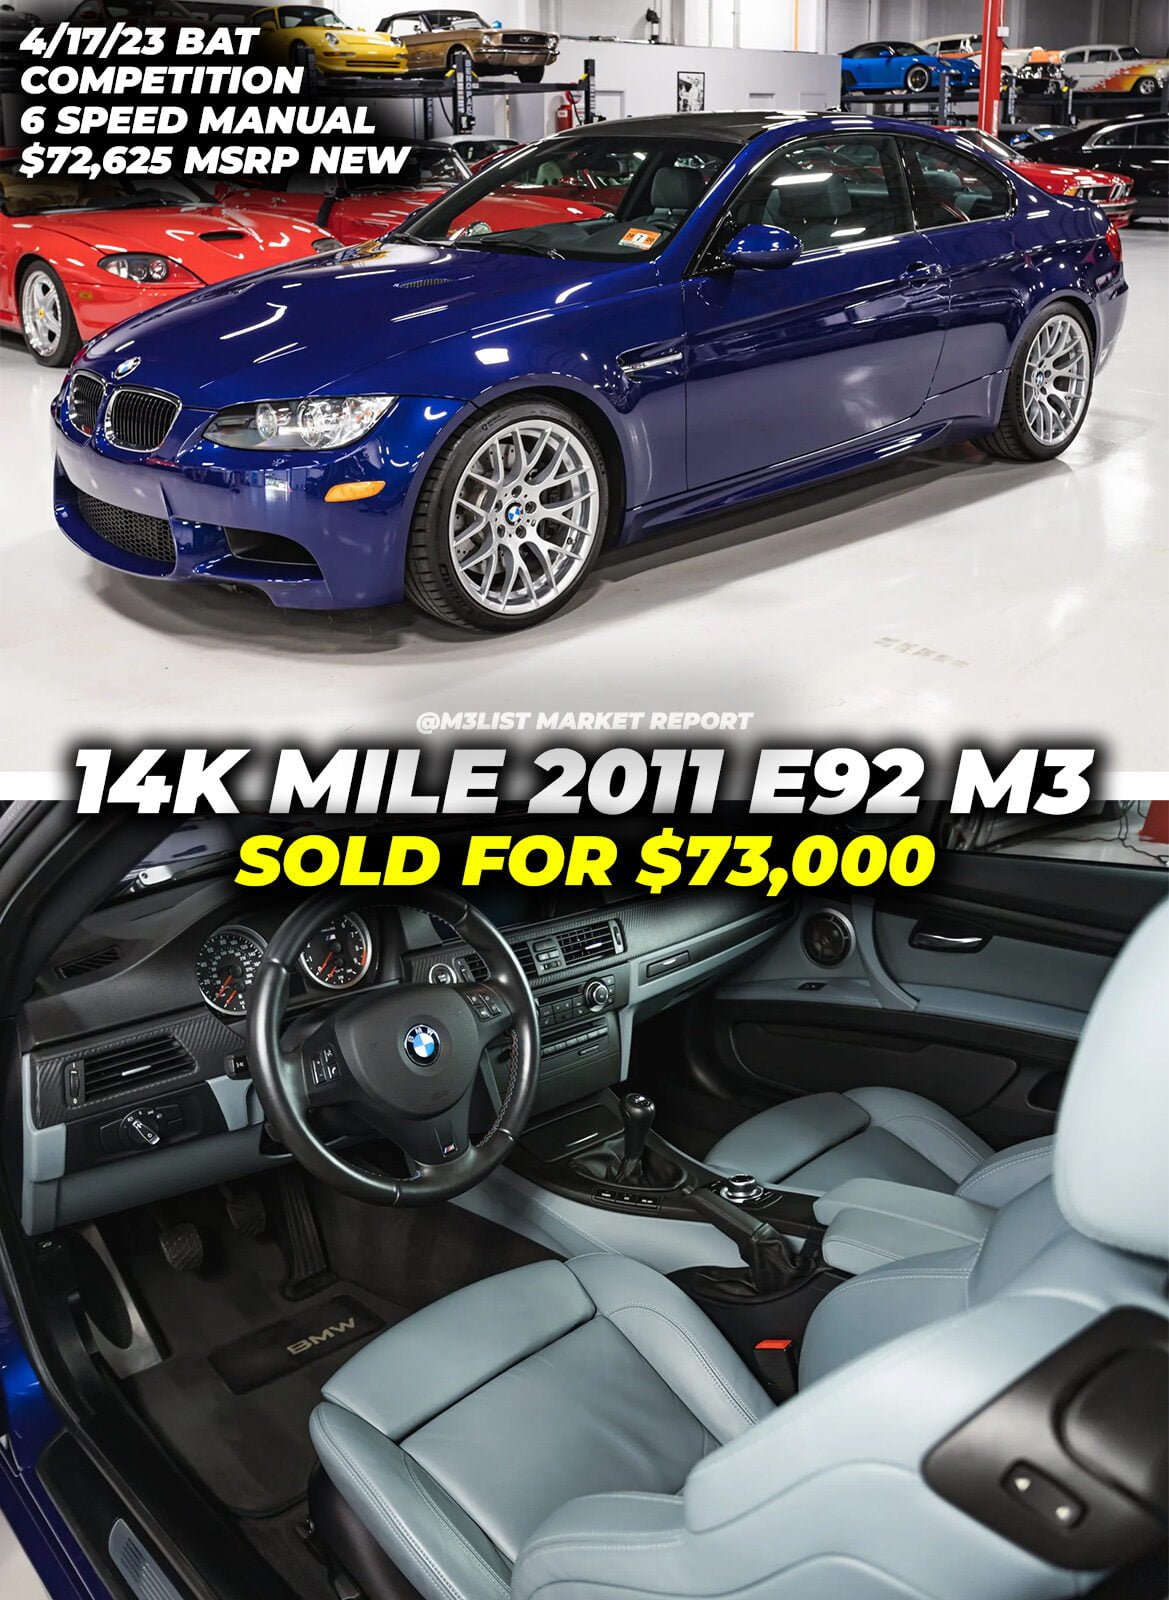 14k mile Interlagos Blue 2011 BMW E92 M3 SOLD for $73,000! Worth it or no?